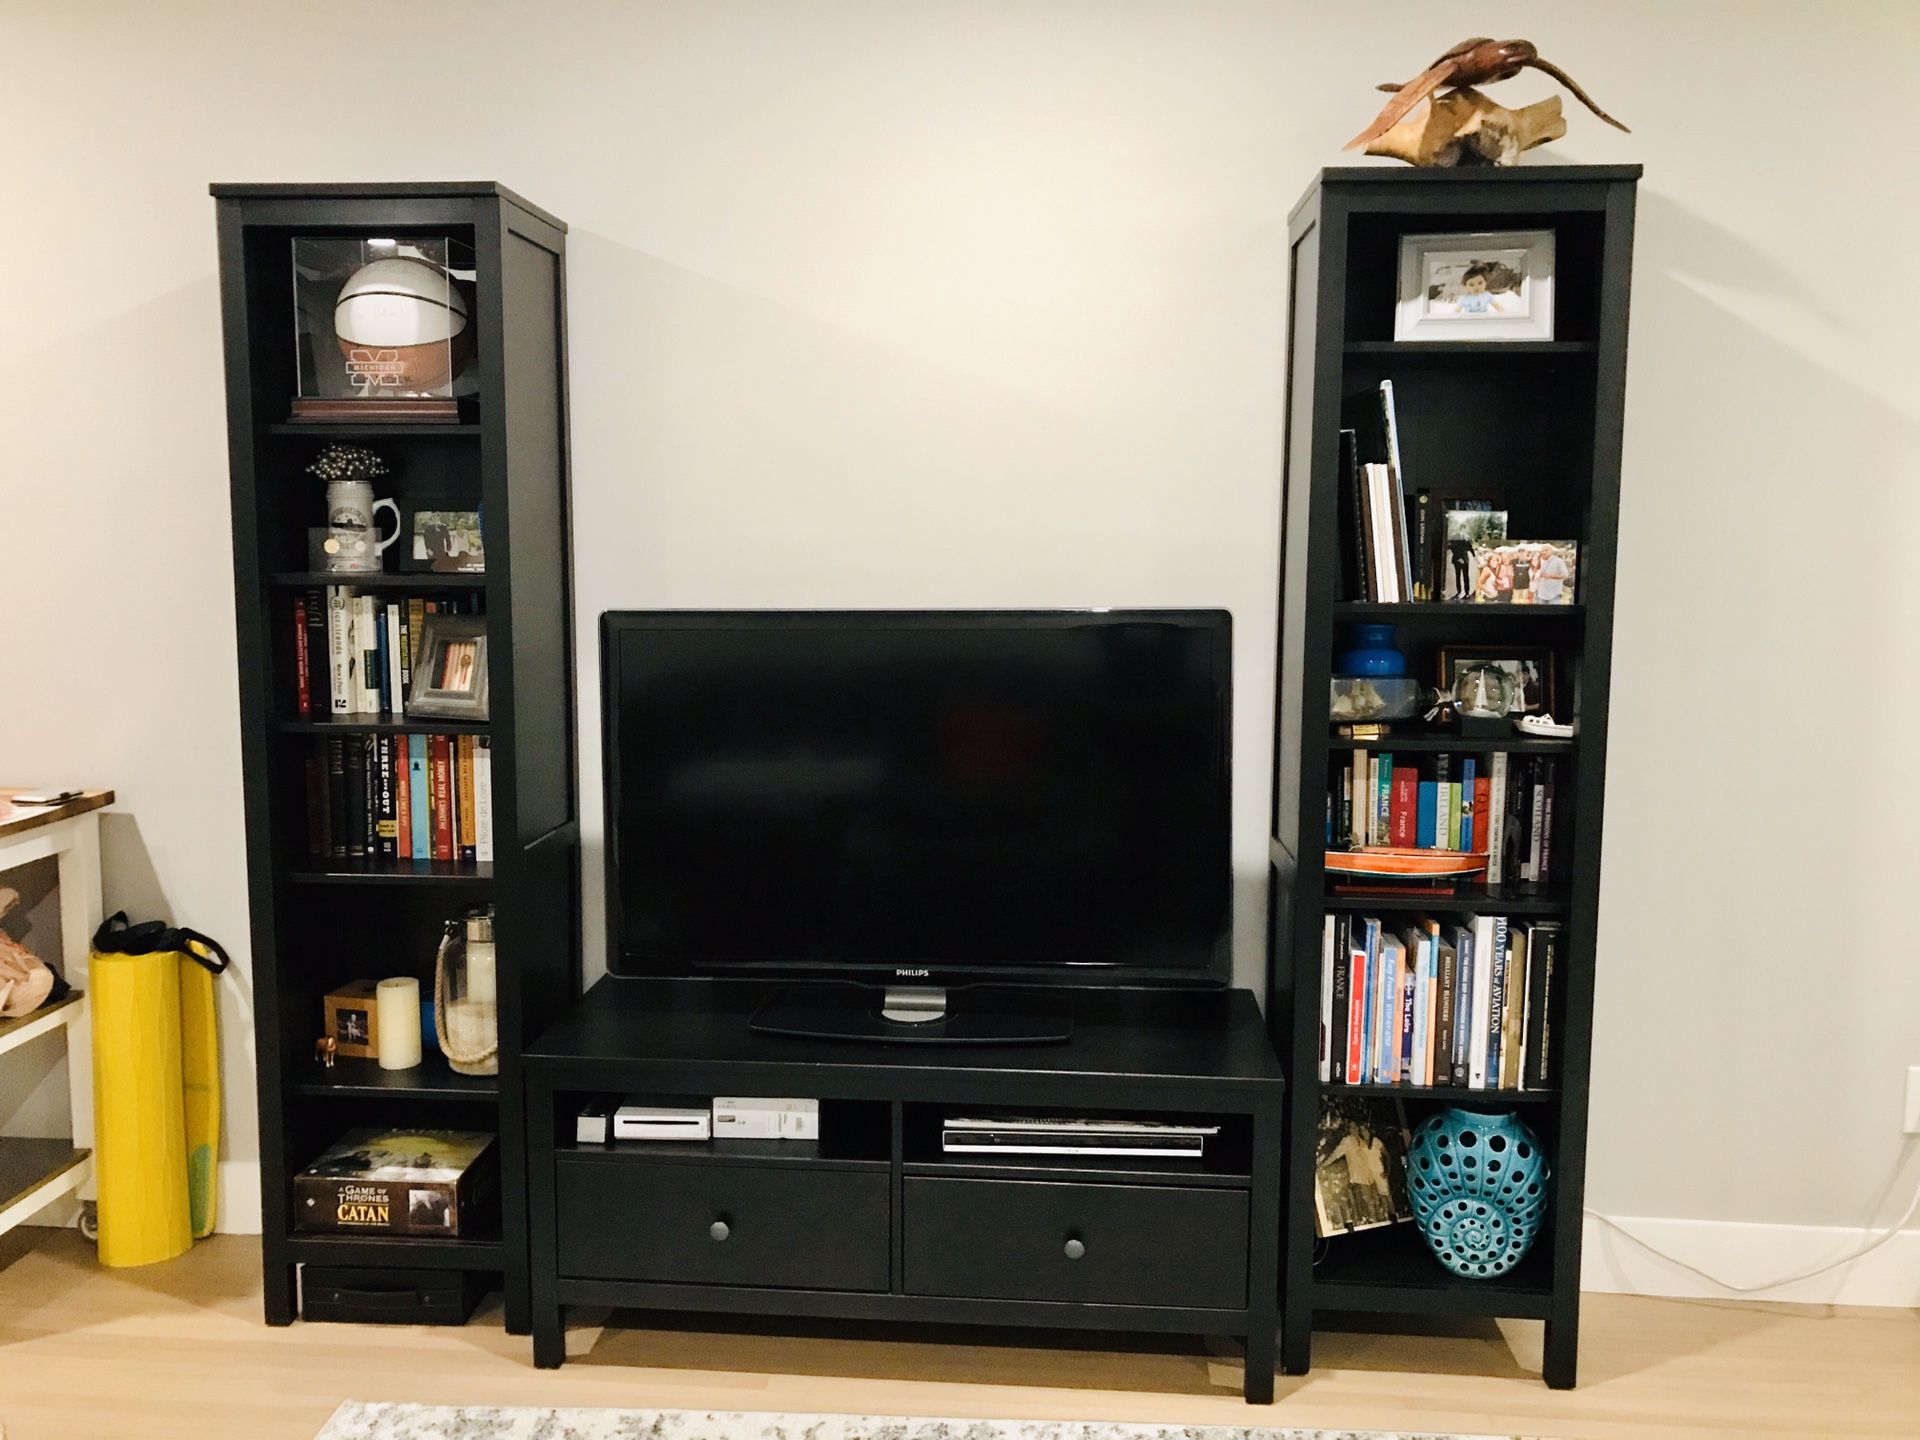 Tv stand and bookshelf / entertainment center